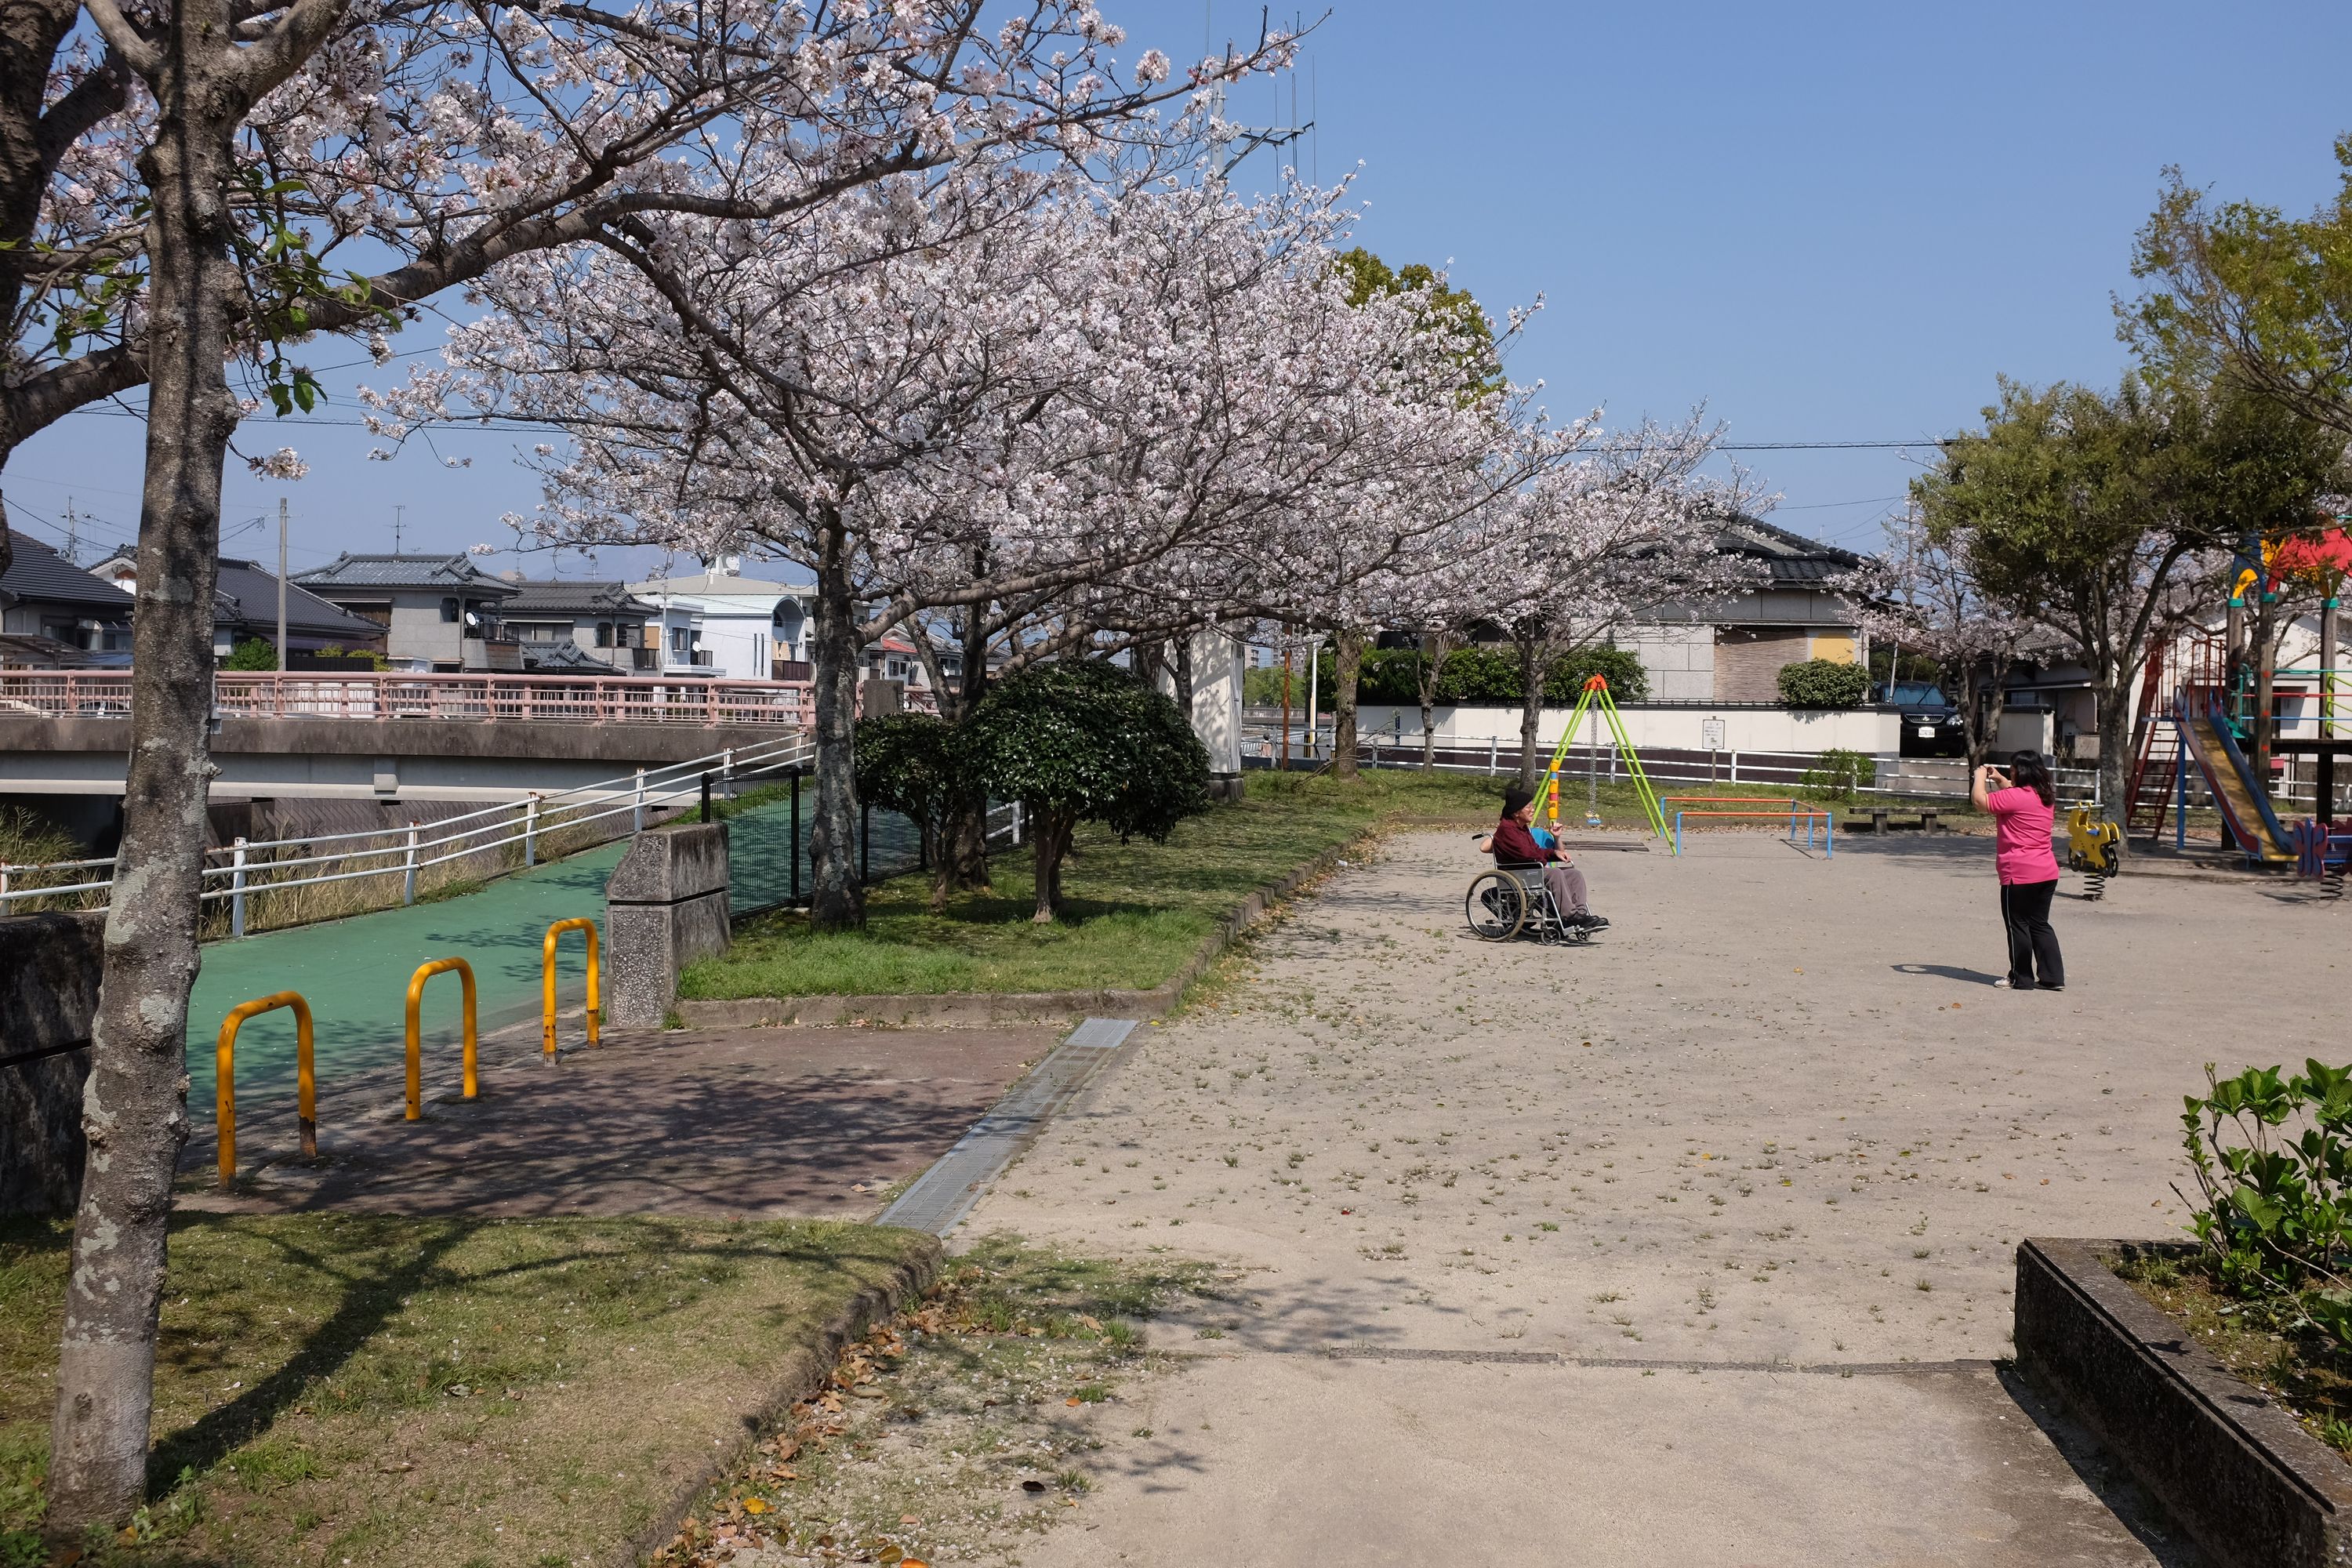 People watching cherry blossoms in Taniyama, Kagoshima City. Photo: Peter Orosz